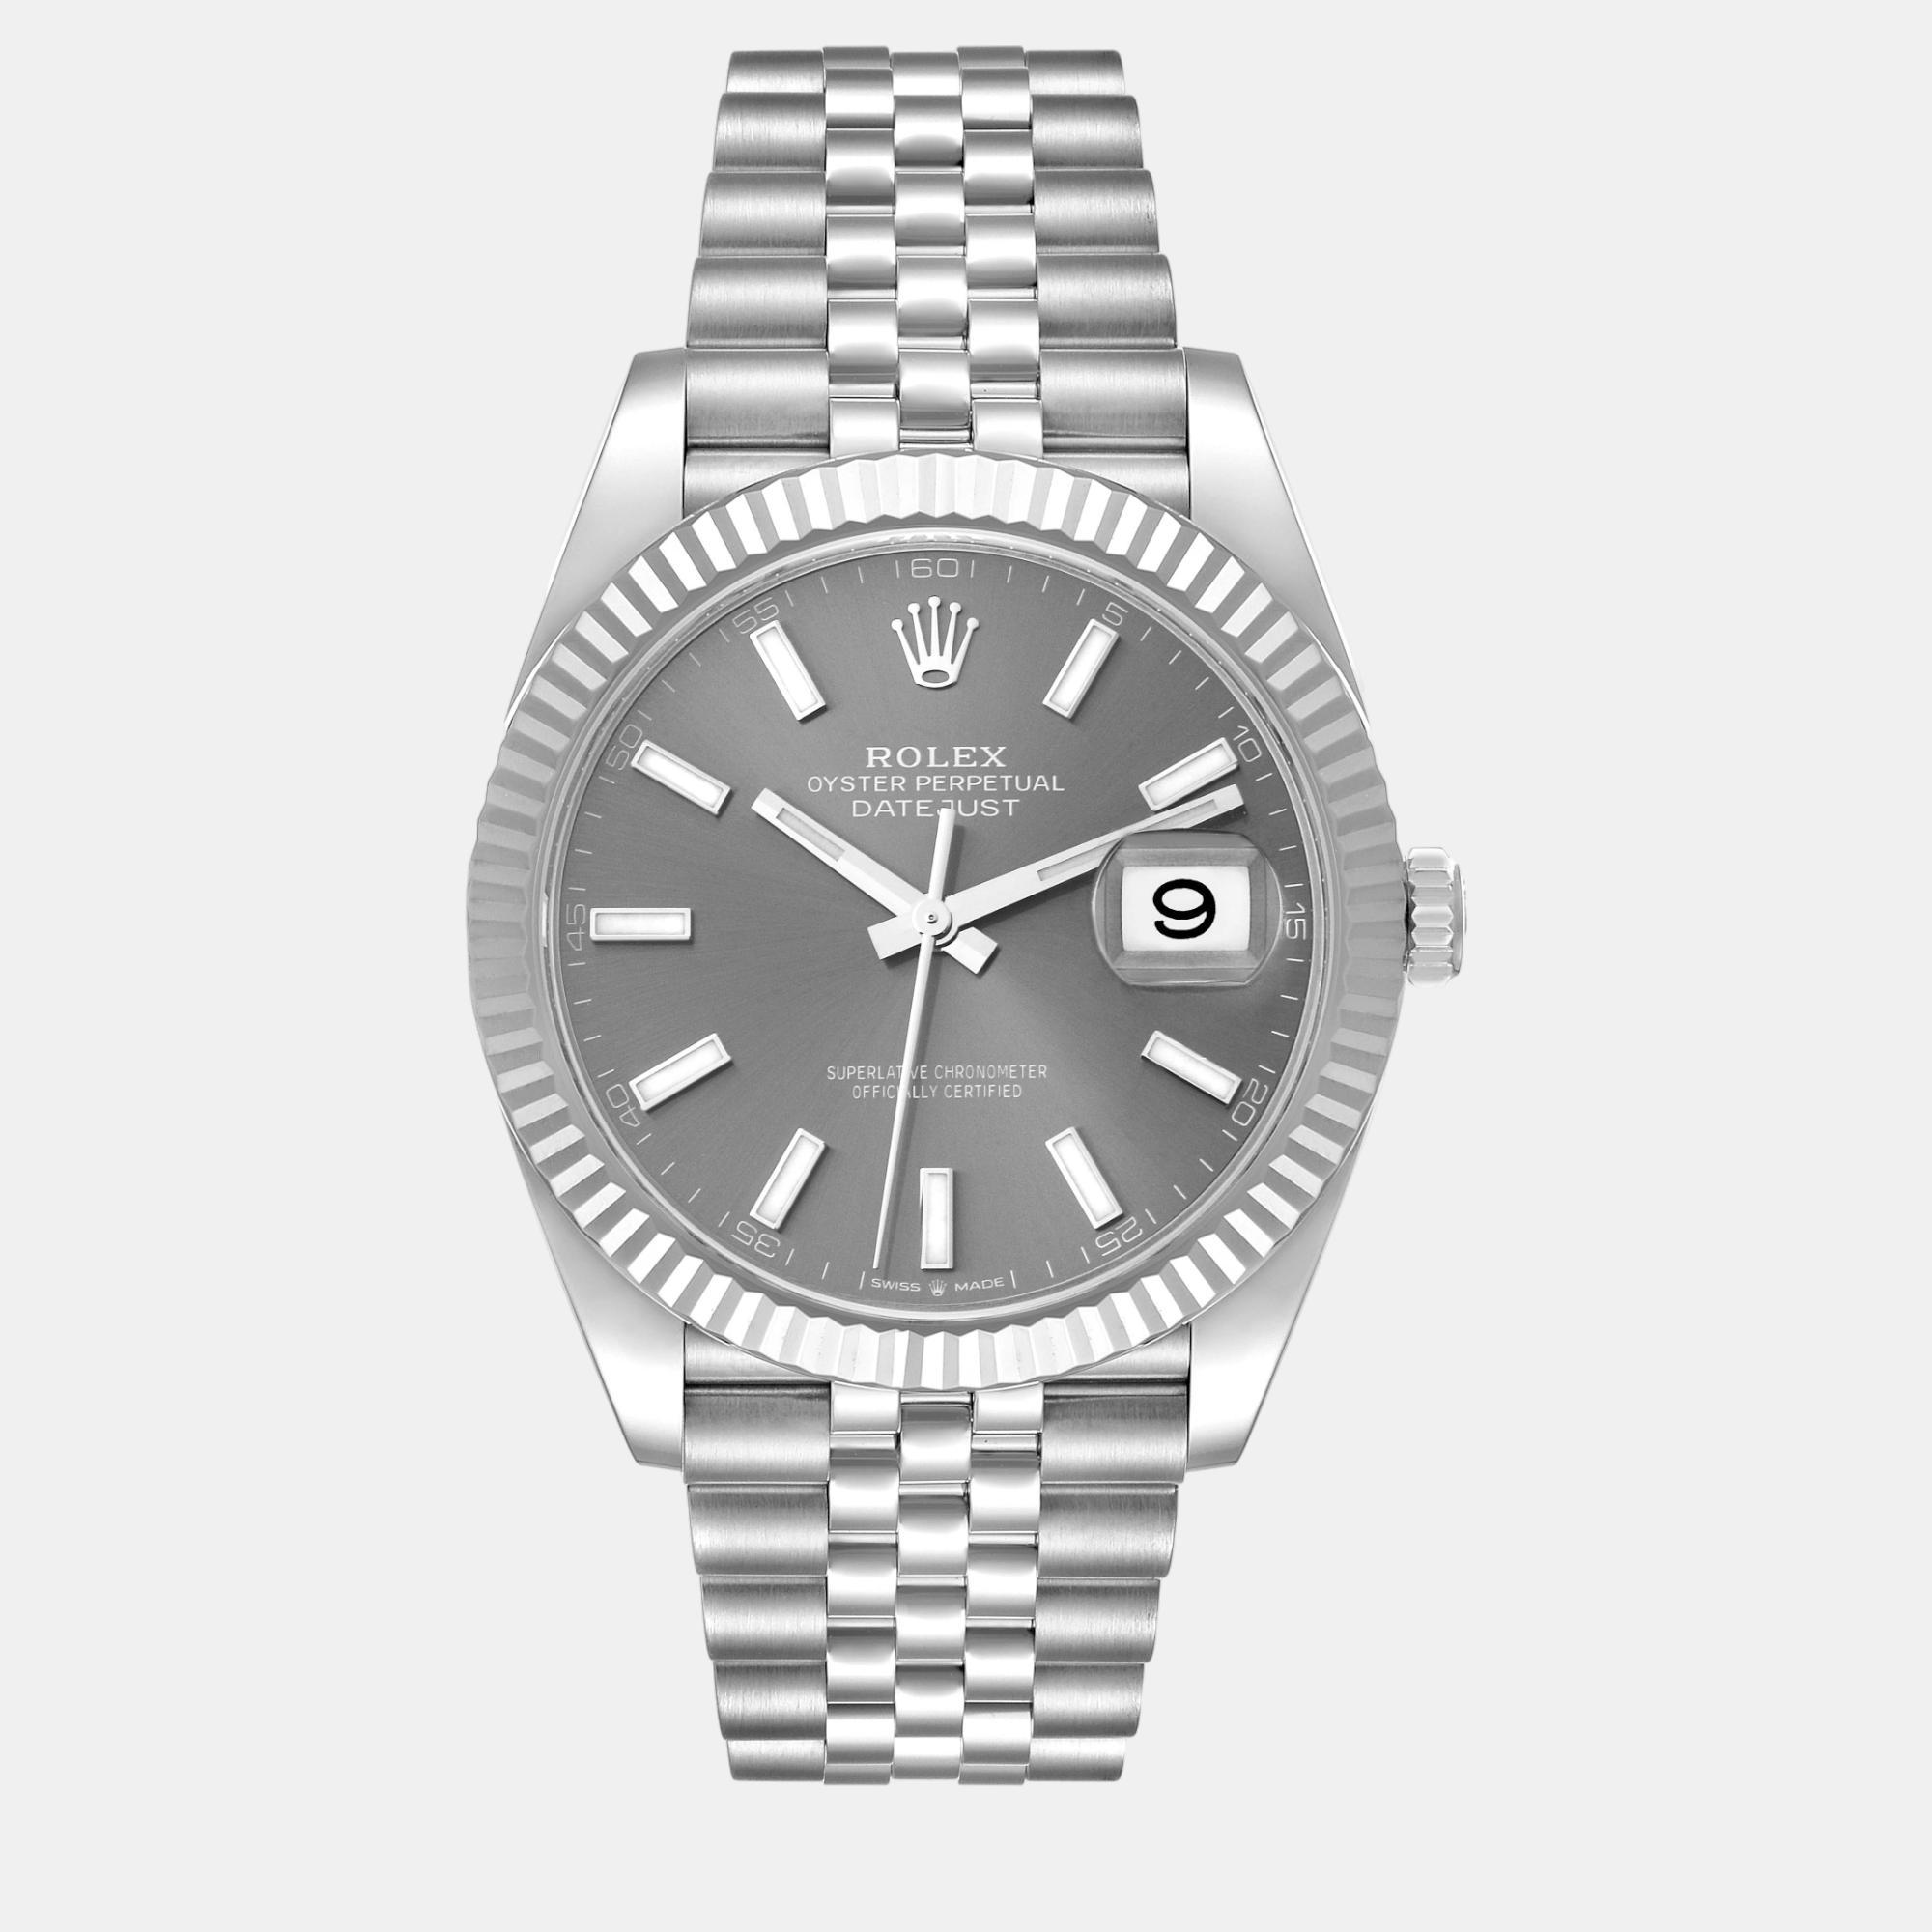 Rolex datejust steel white gold slate dial men's watch 41 mm